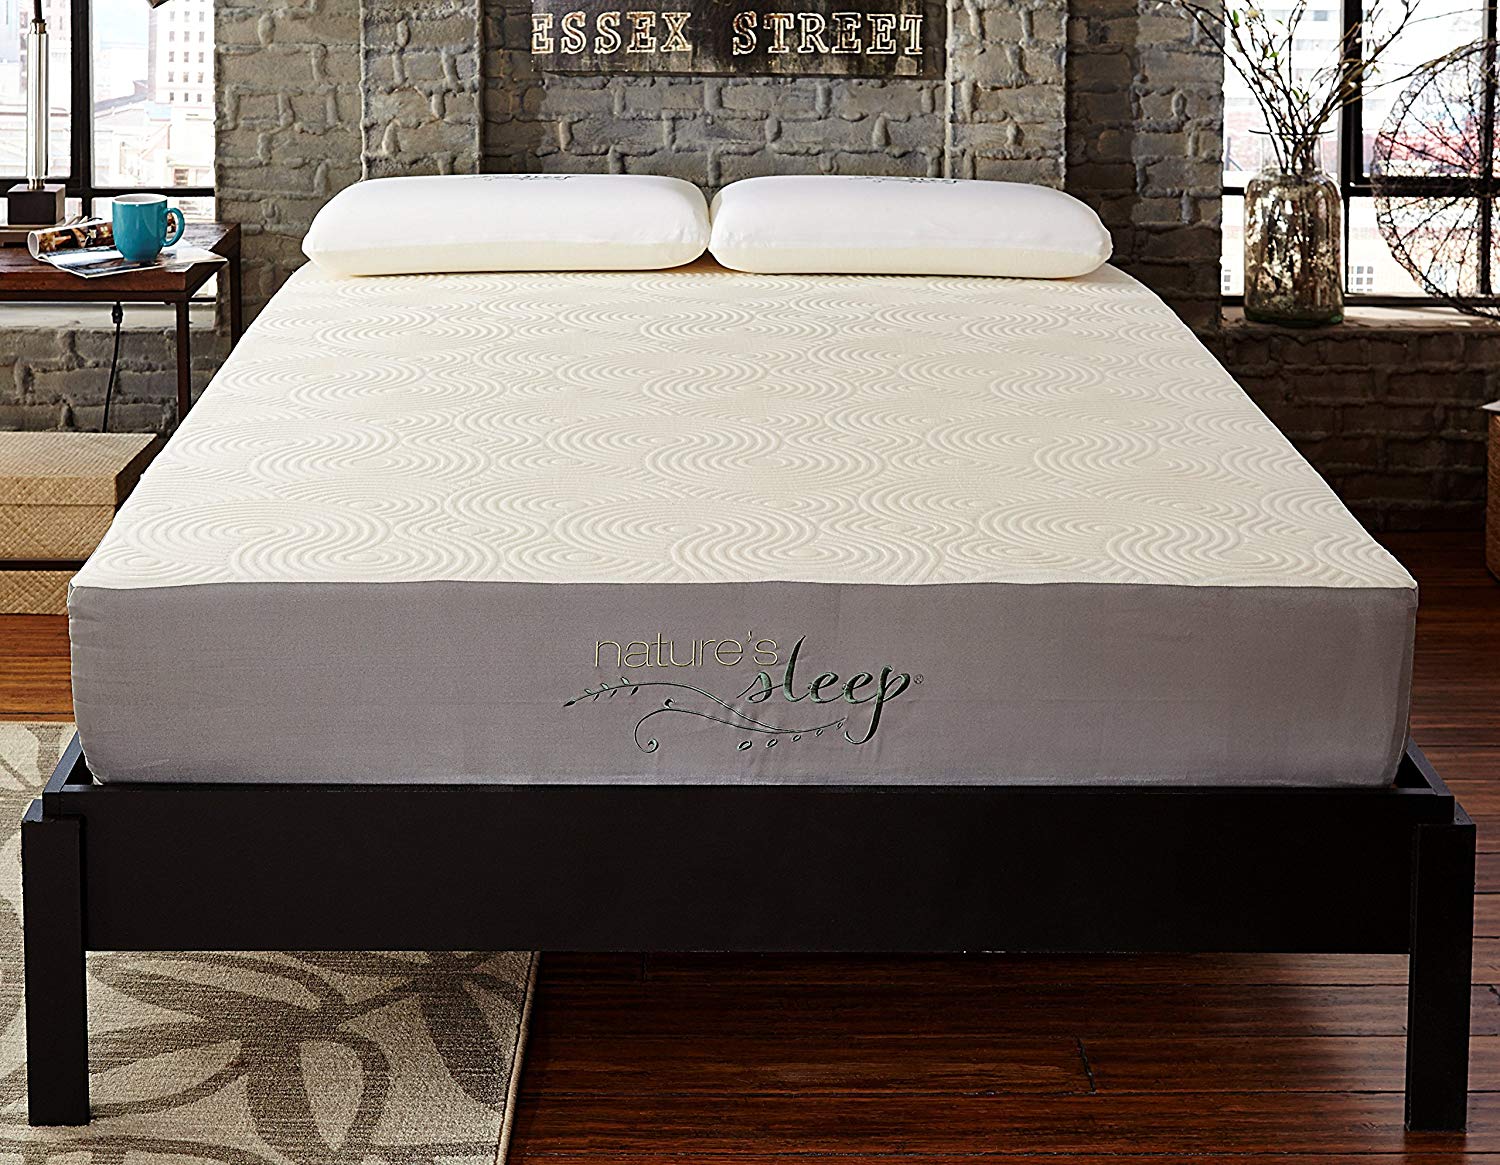 nature's sleep mattress differs